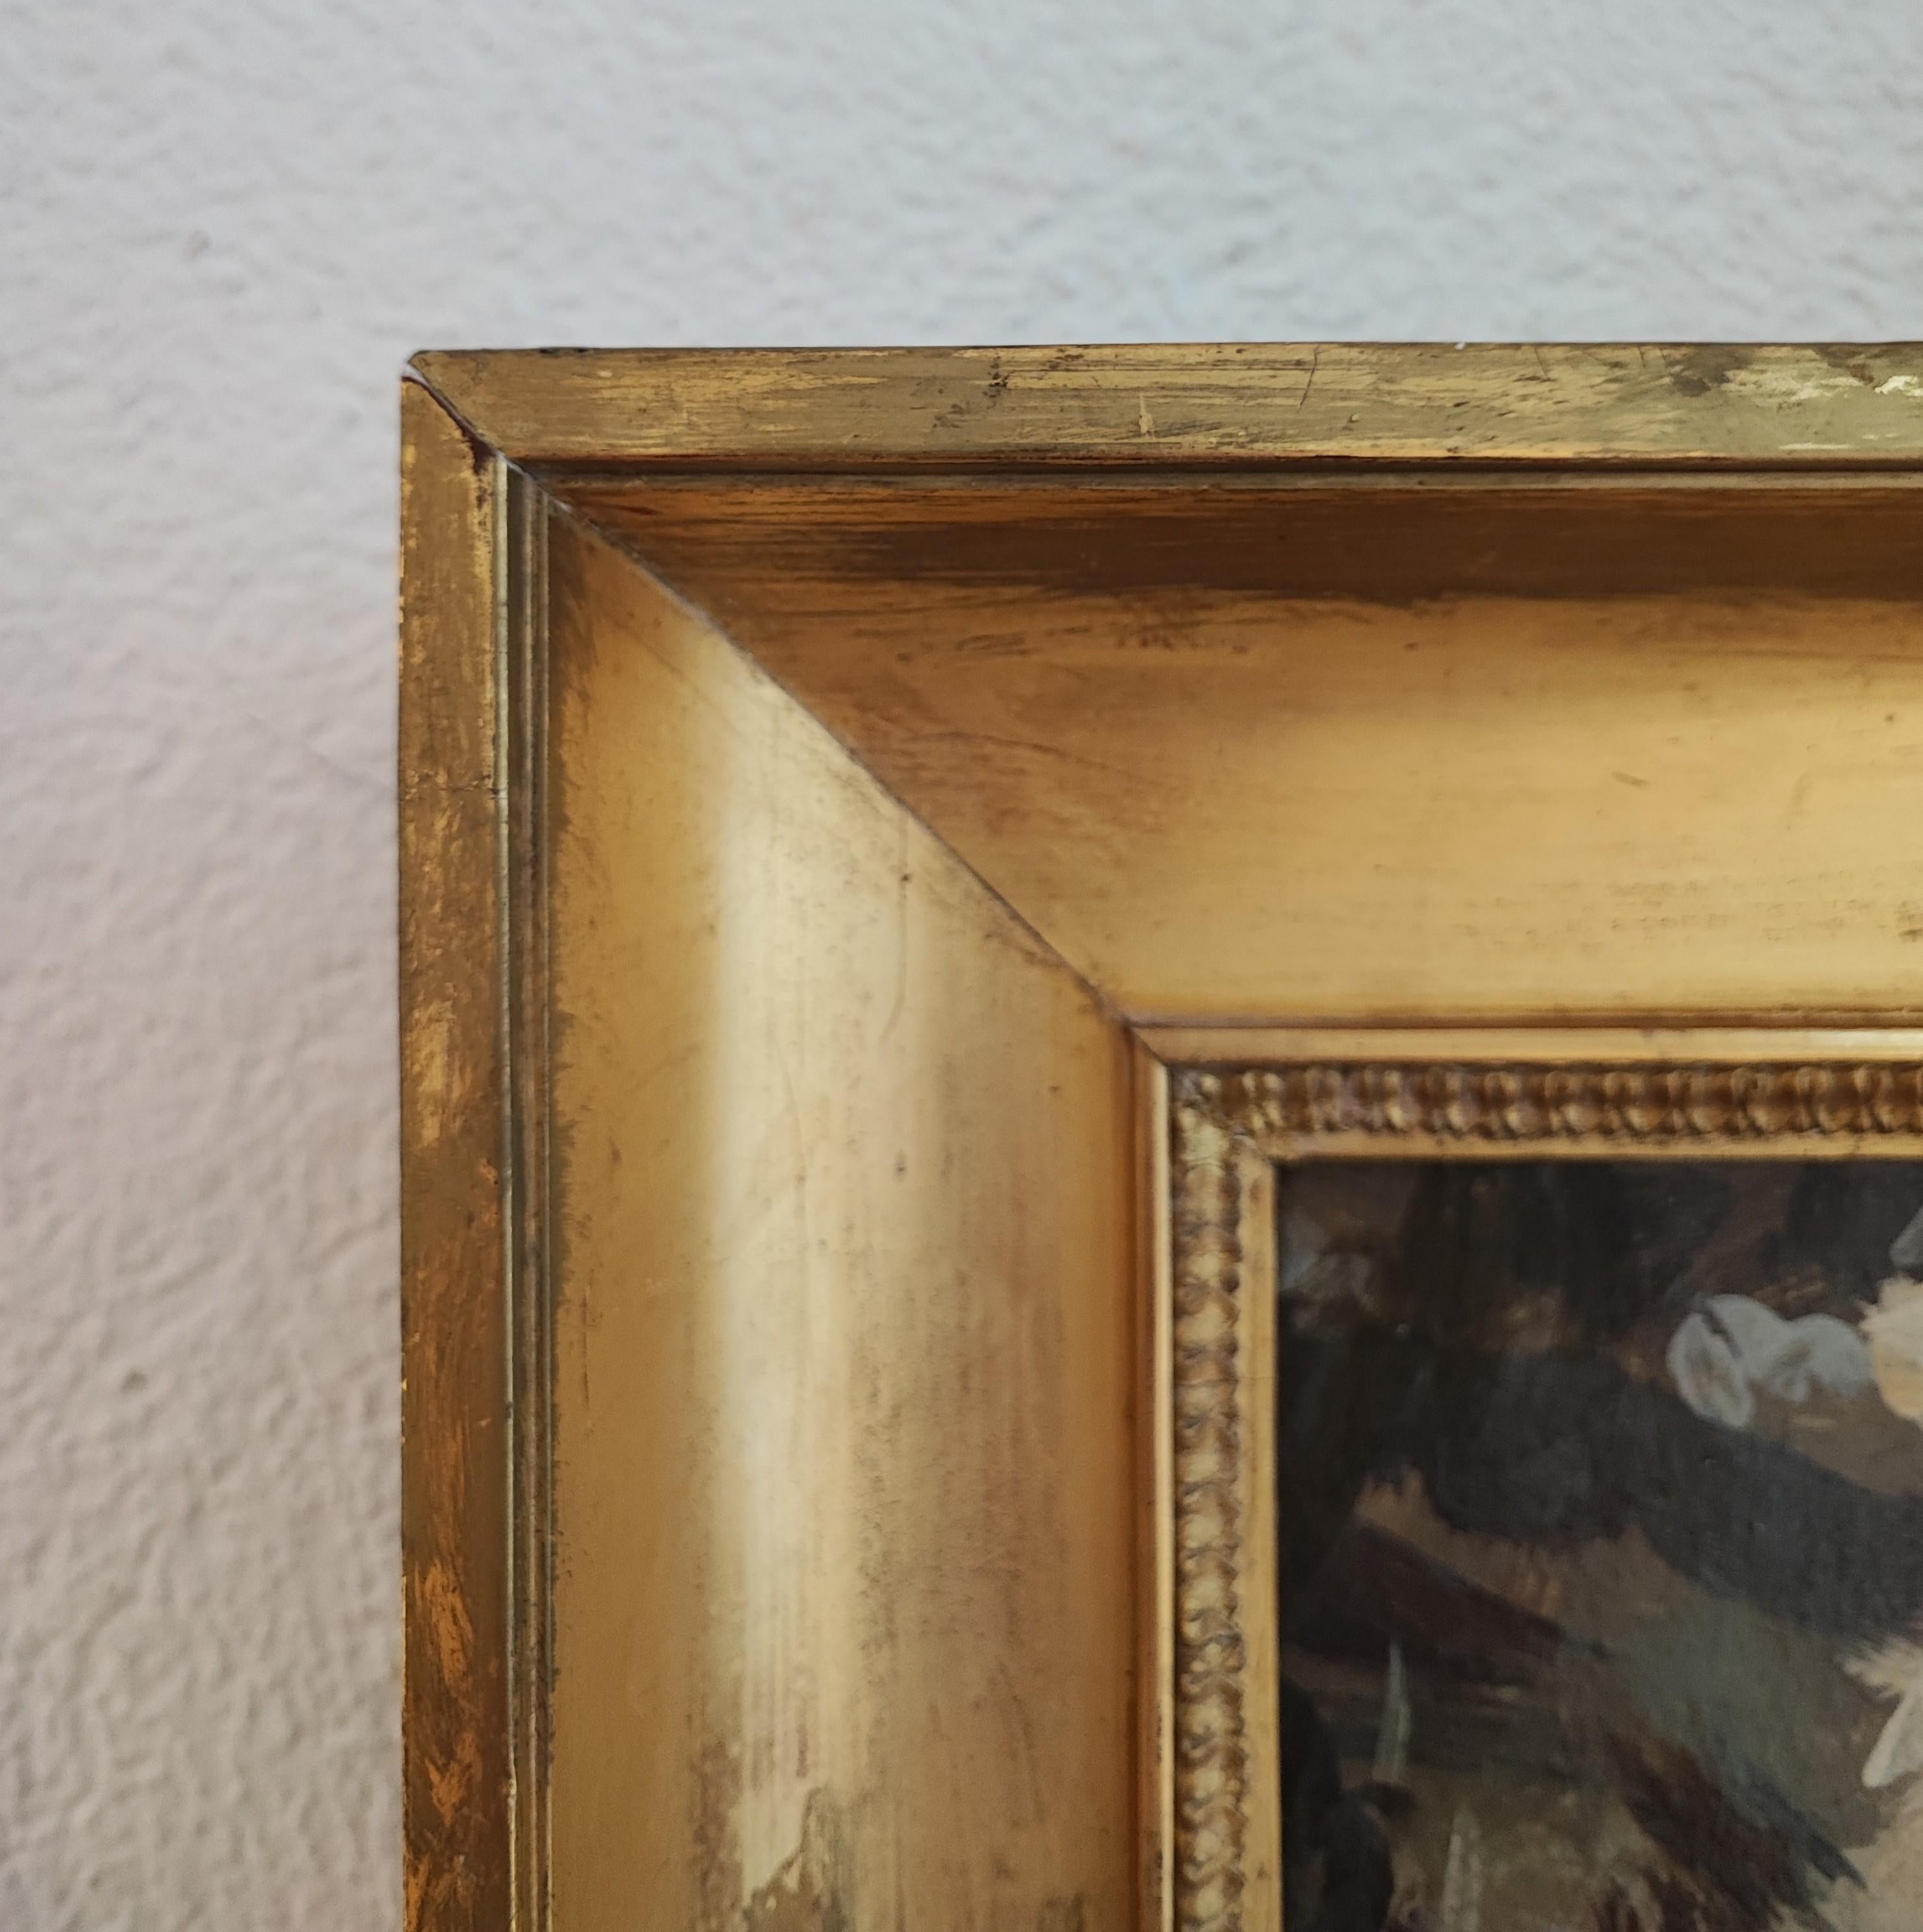 Oil on cardboard
Golden wooden frame
81.5 x 53 x 6 cm